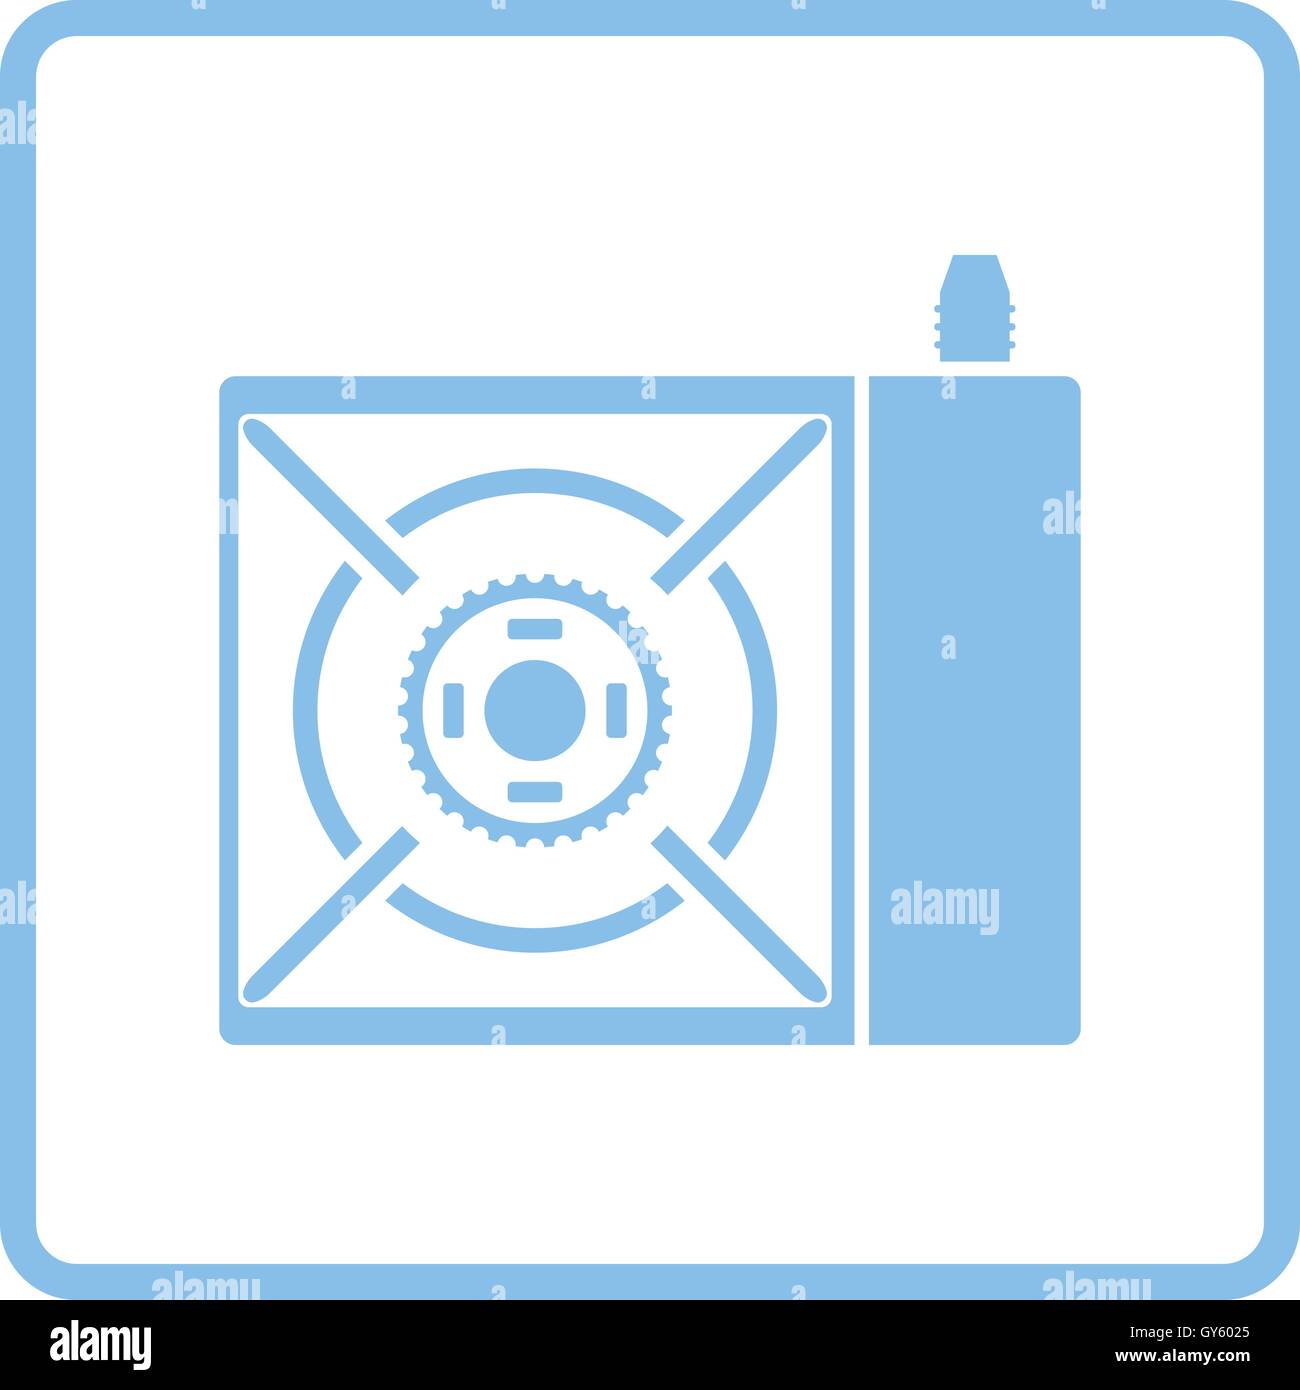 Camping gas burner stove icon. Blue frame design. Vector illustration. Stock Vector